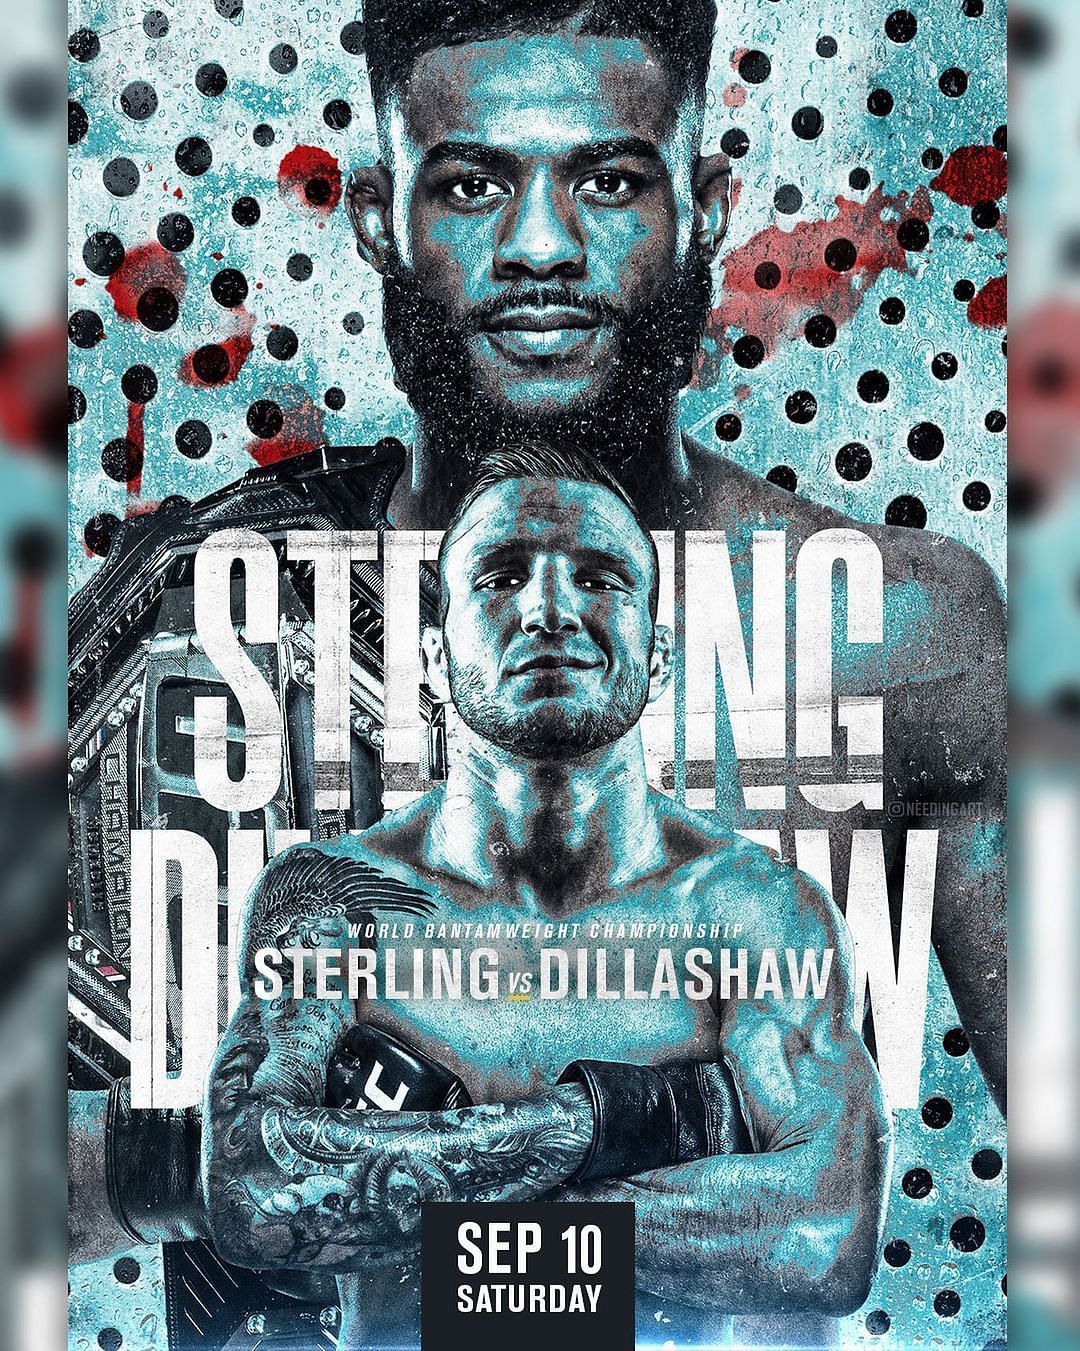 Aljamain Sterling vs. T.J. Dillashaw [Image via @needingart on Instagram]